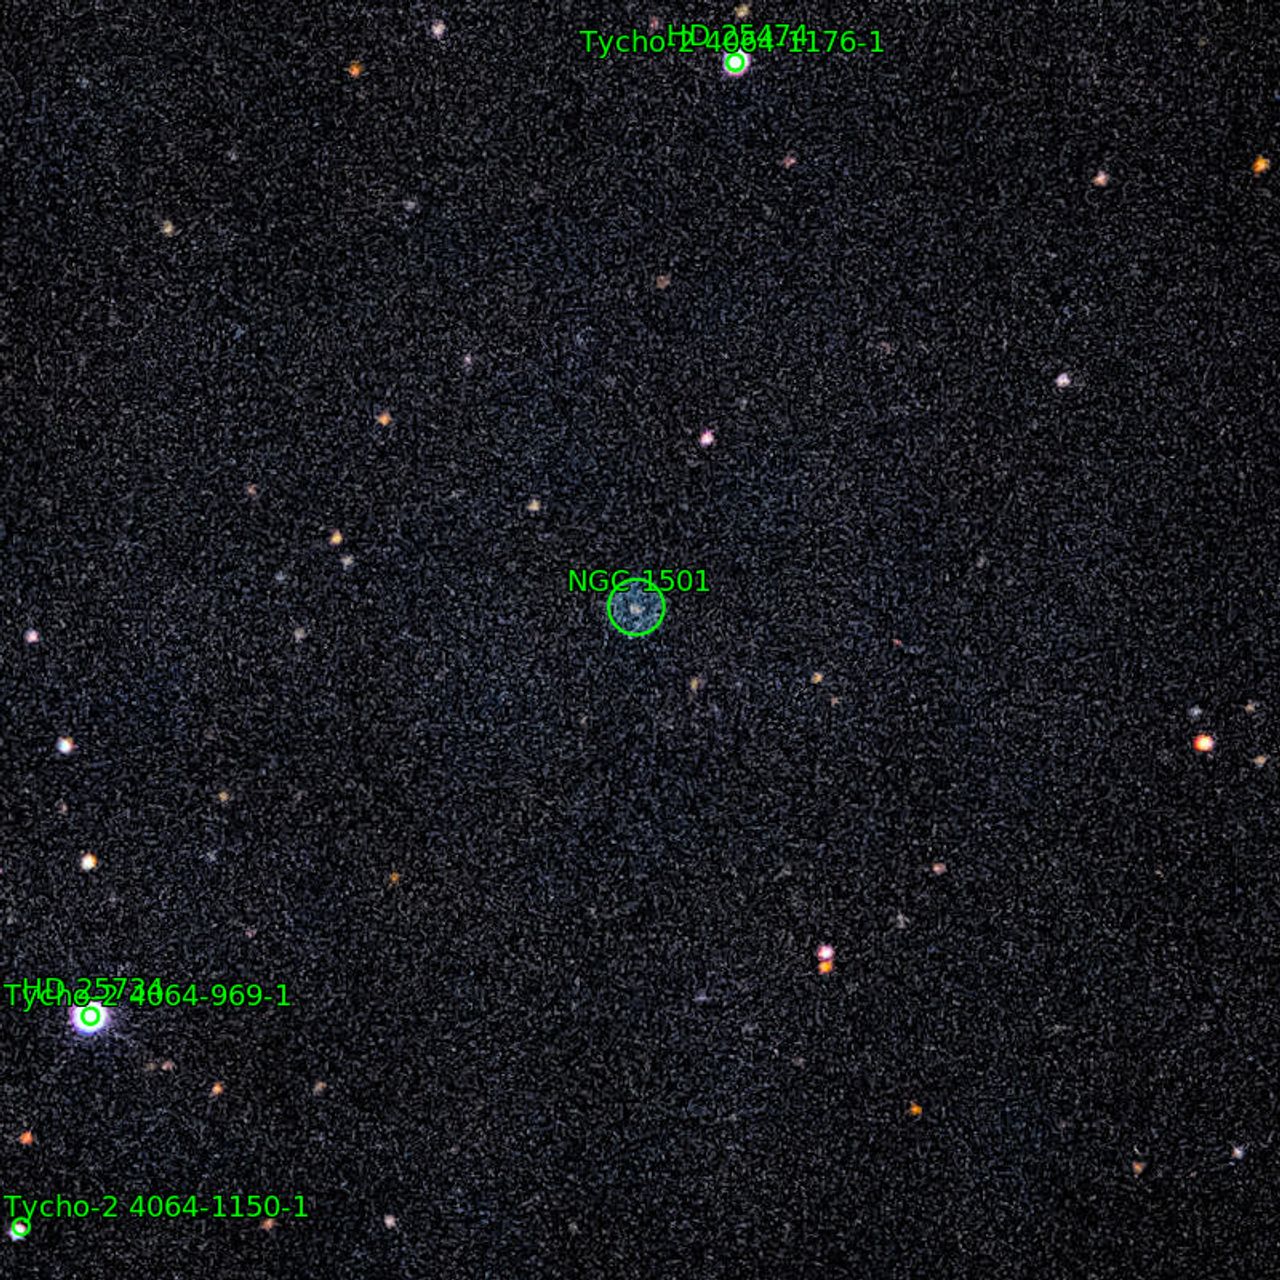 Annotation around NGC1501